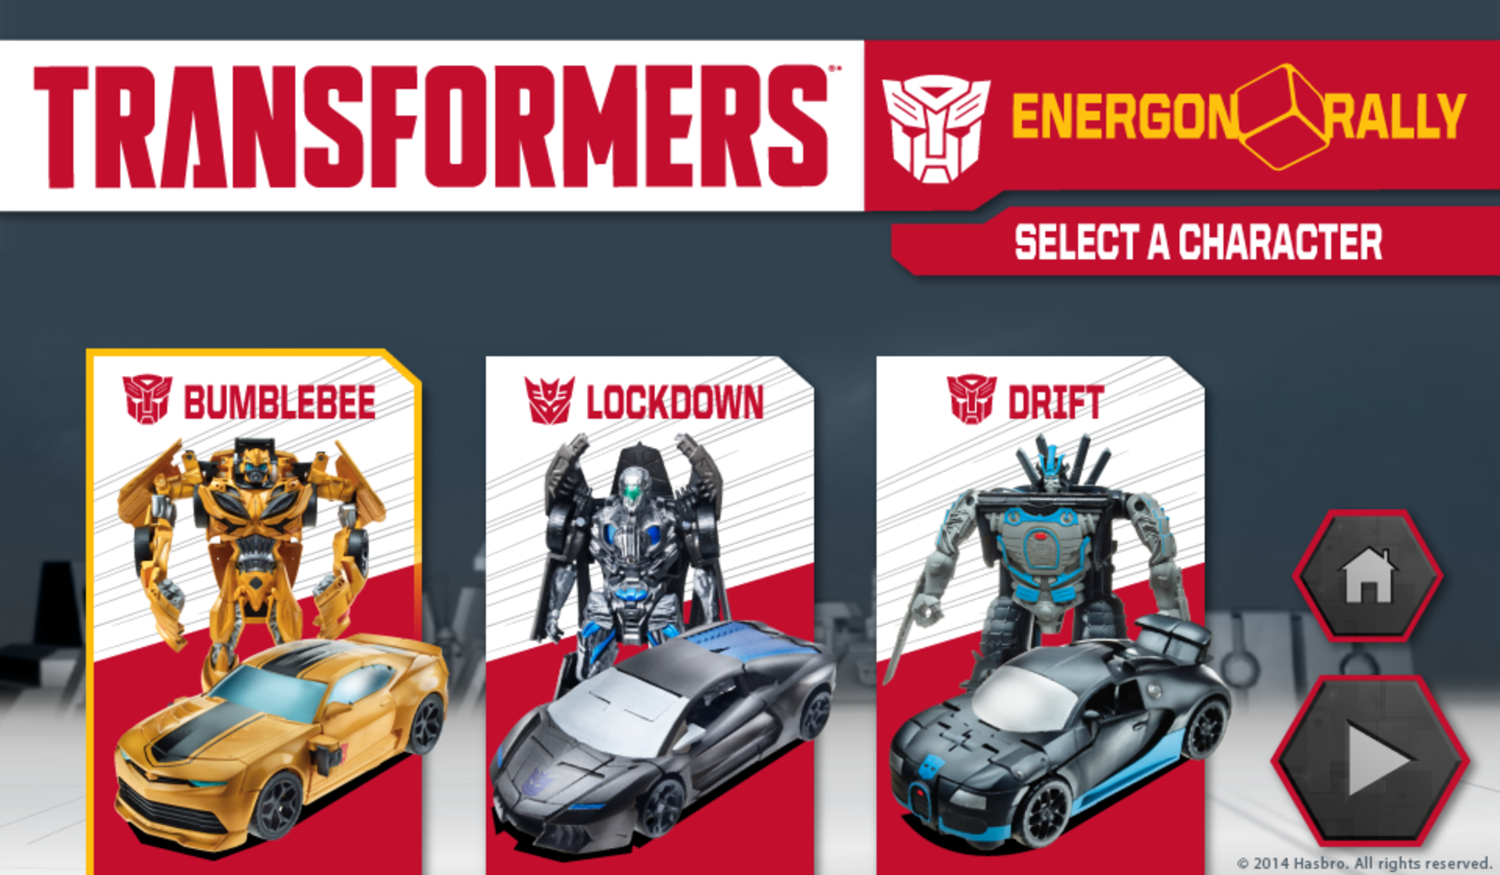 Transformers Energon Rally Game Character Select Screenshot.